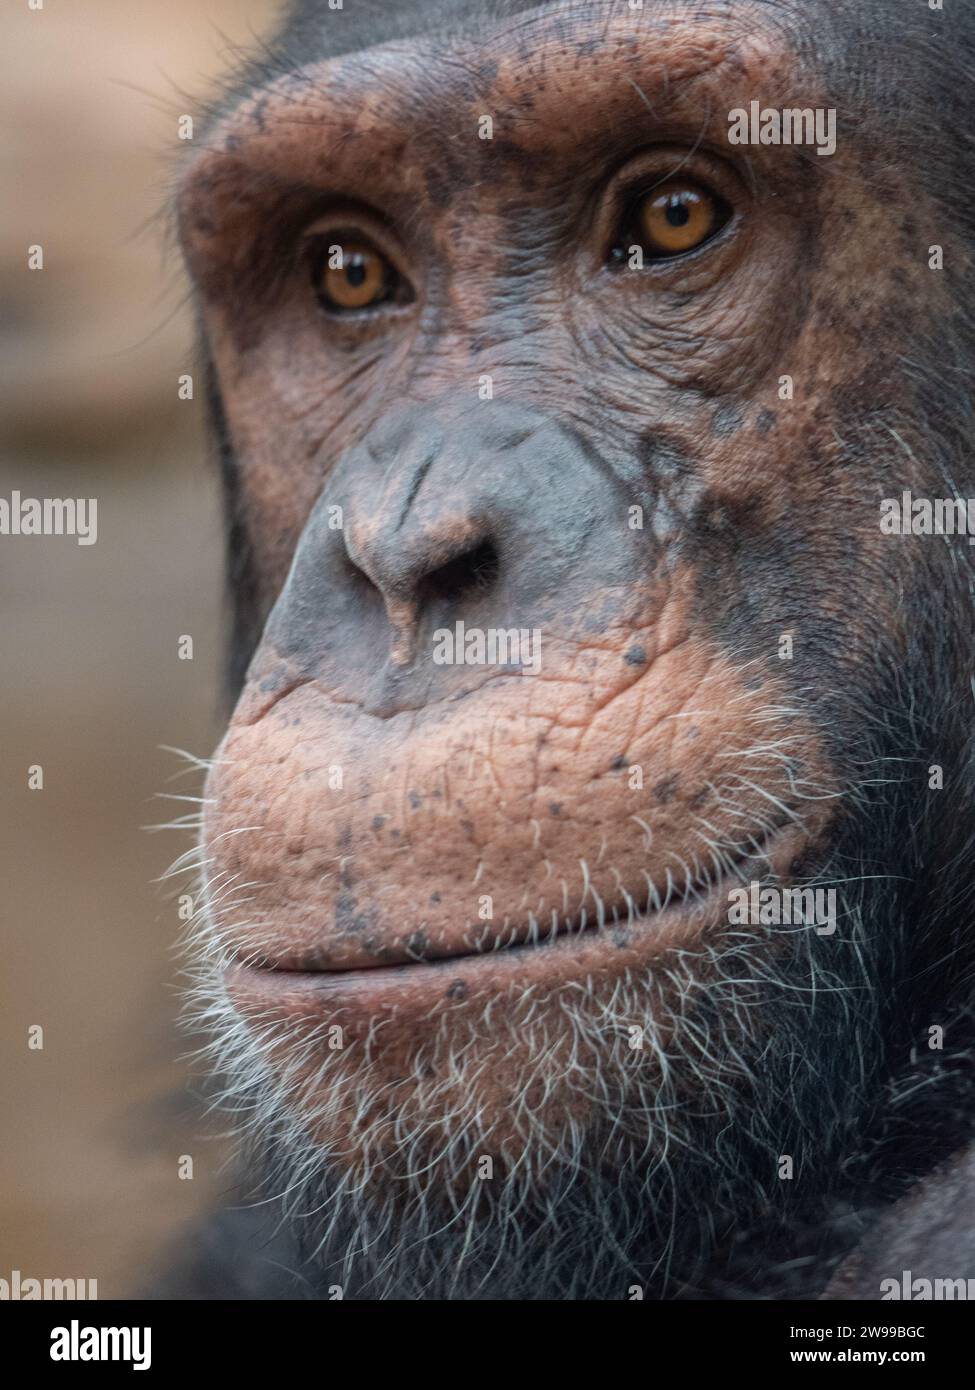 A closeup portrait of a chimpanzee. France Stock Photo